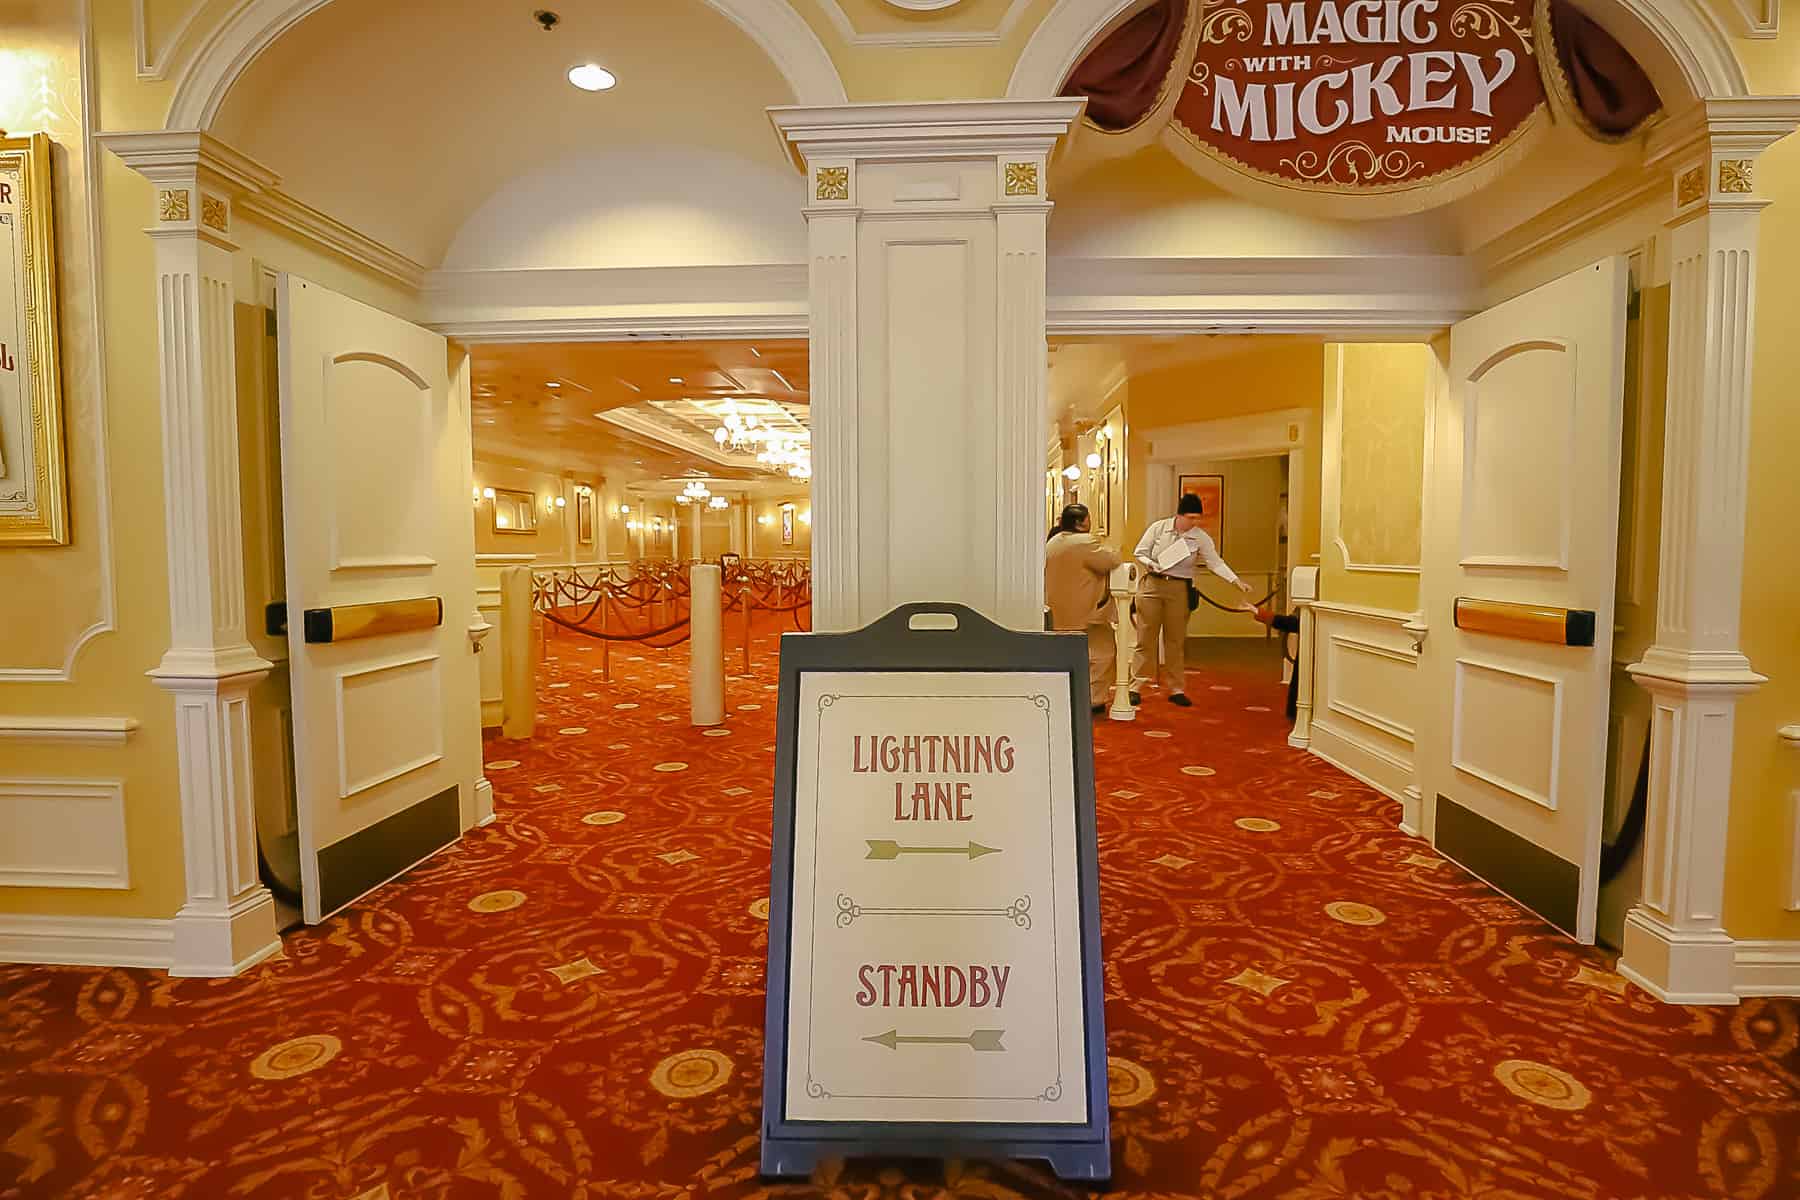 Lightning Lane entrance to Meet Mickey Mouse at Magic Kingdom